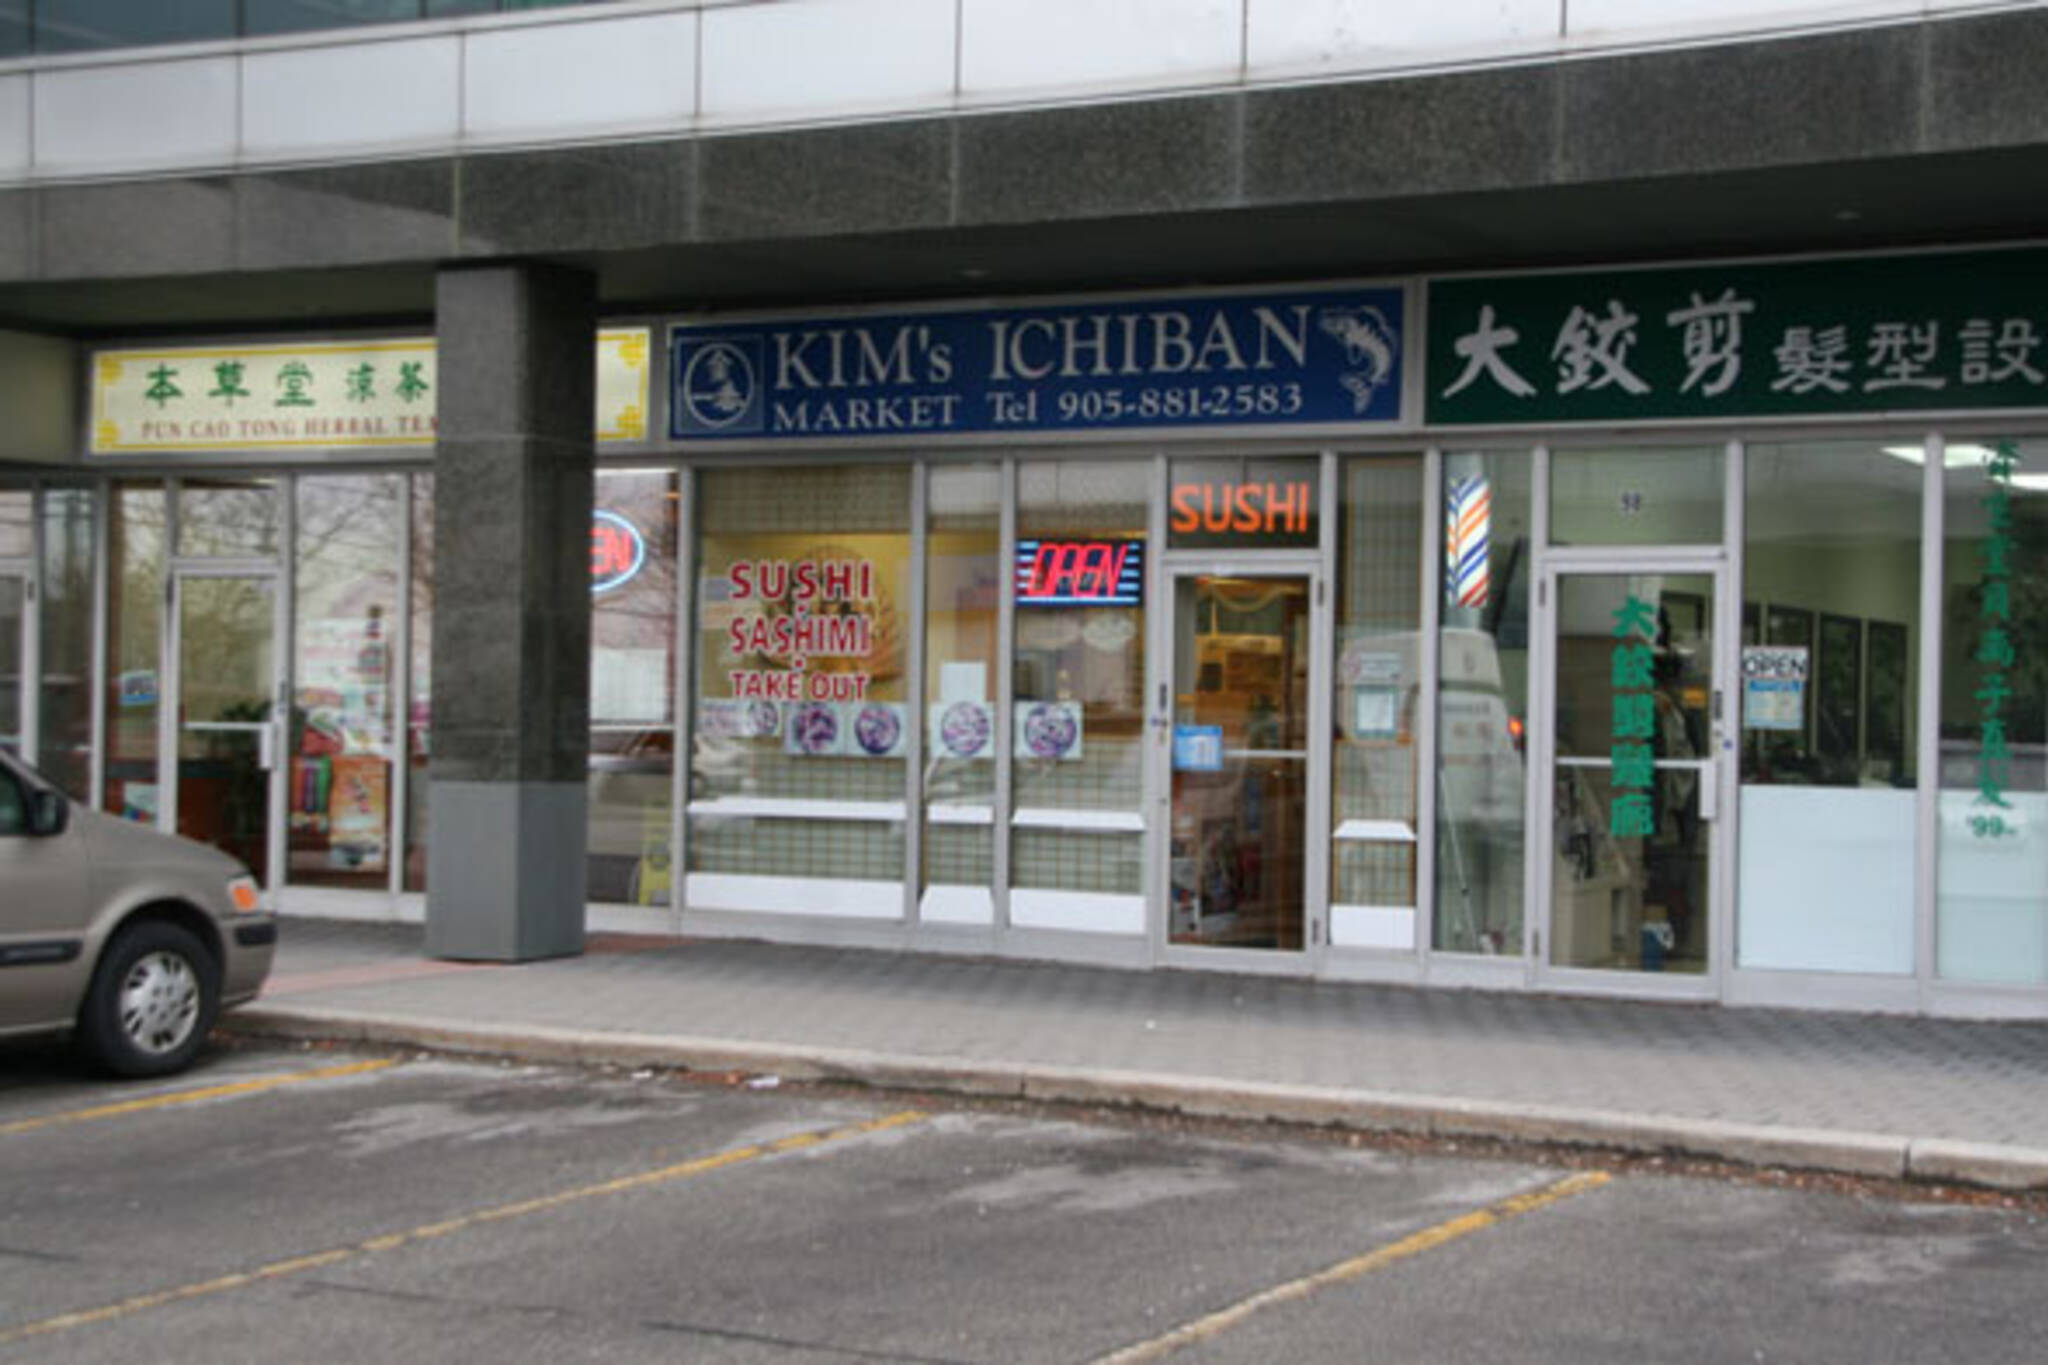 Kim's Ichiban